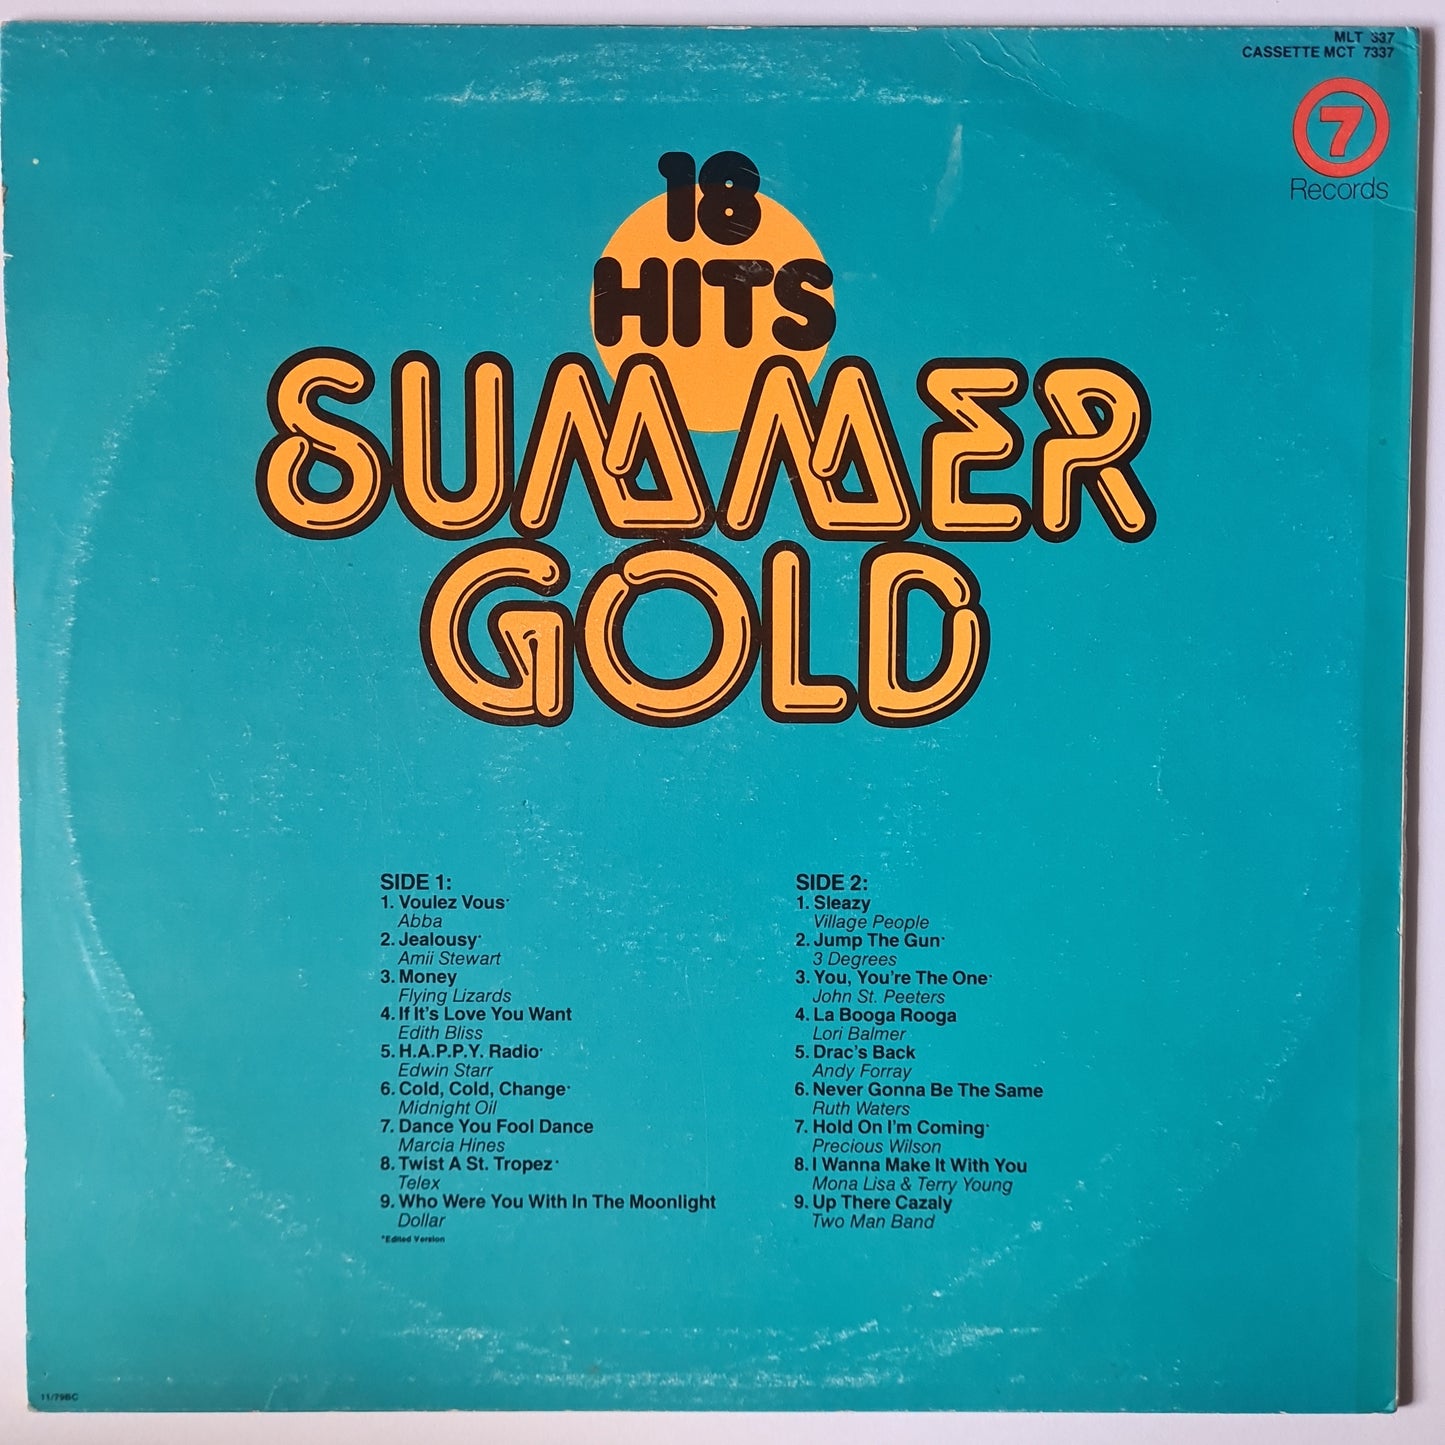 Various Artists/Hits album - 18 Hits Summer Gold  - 1979 - Vinyl Record